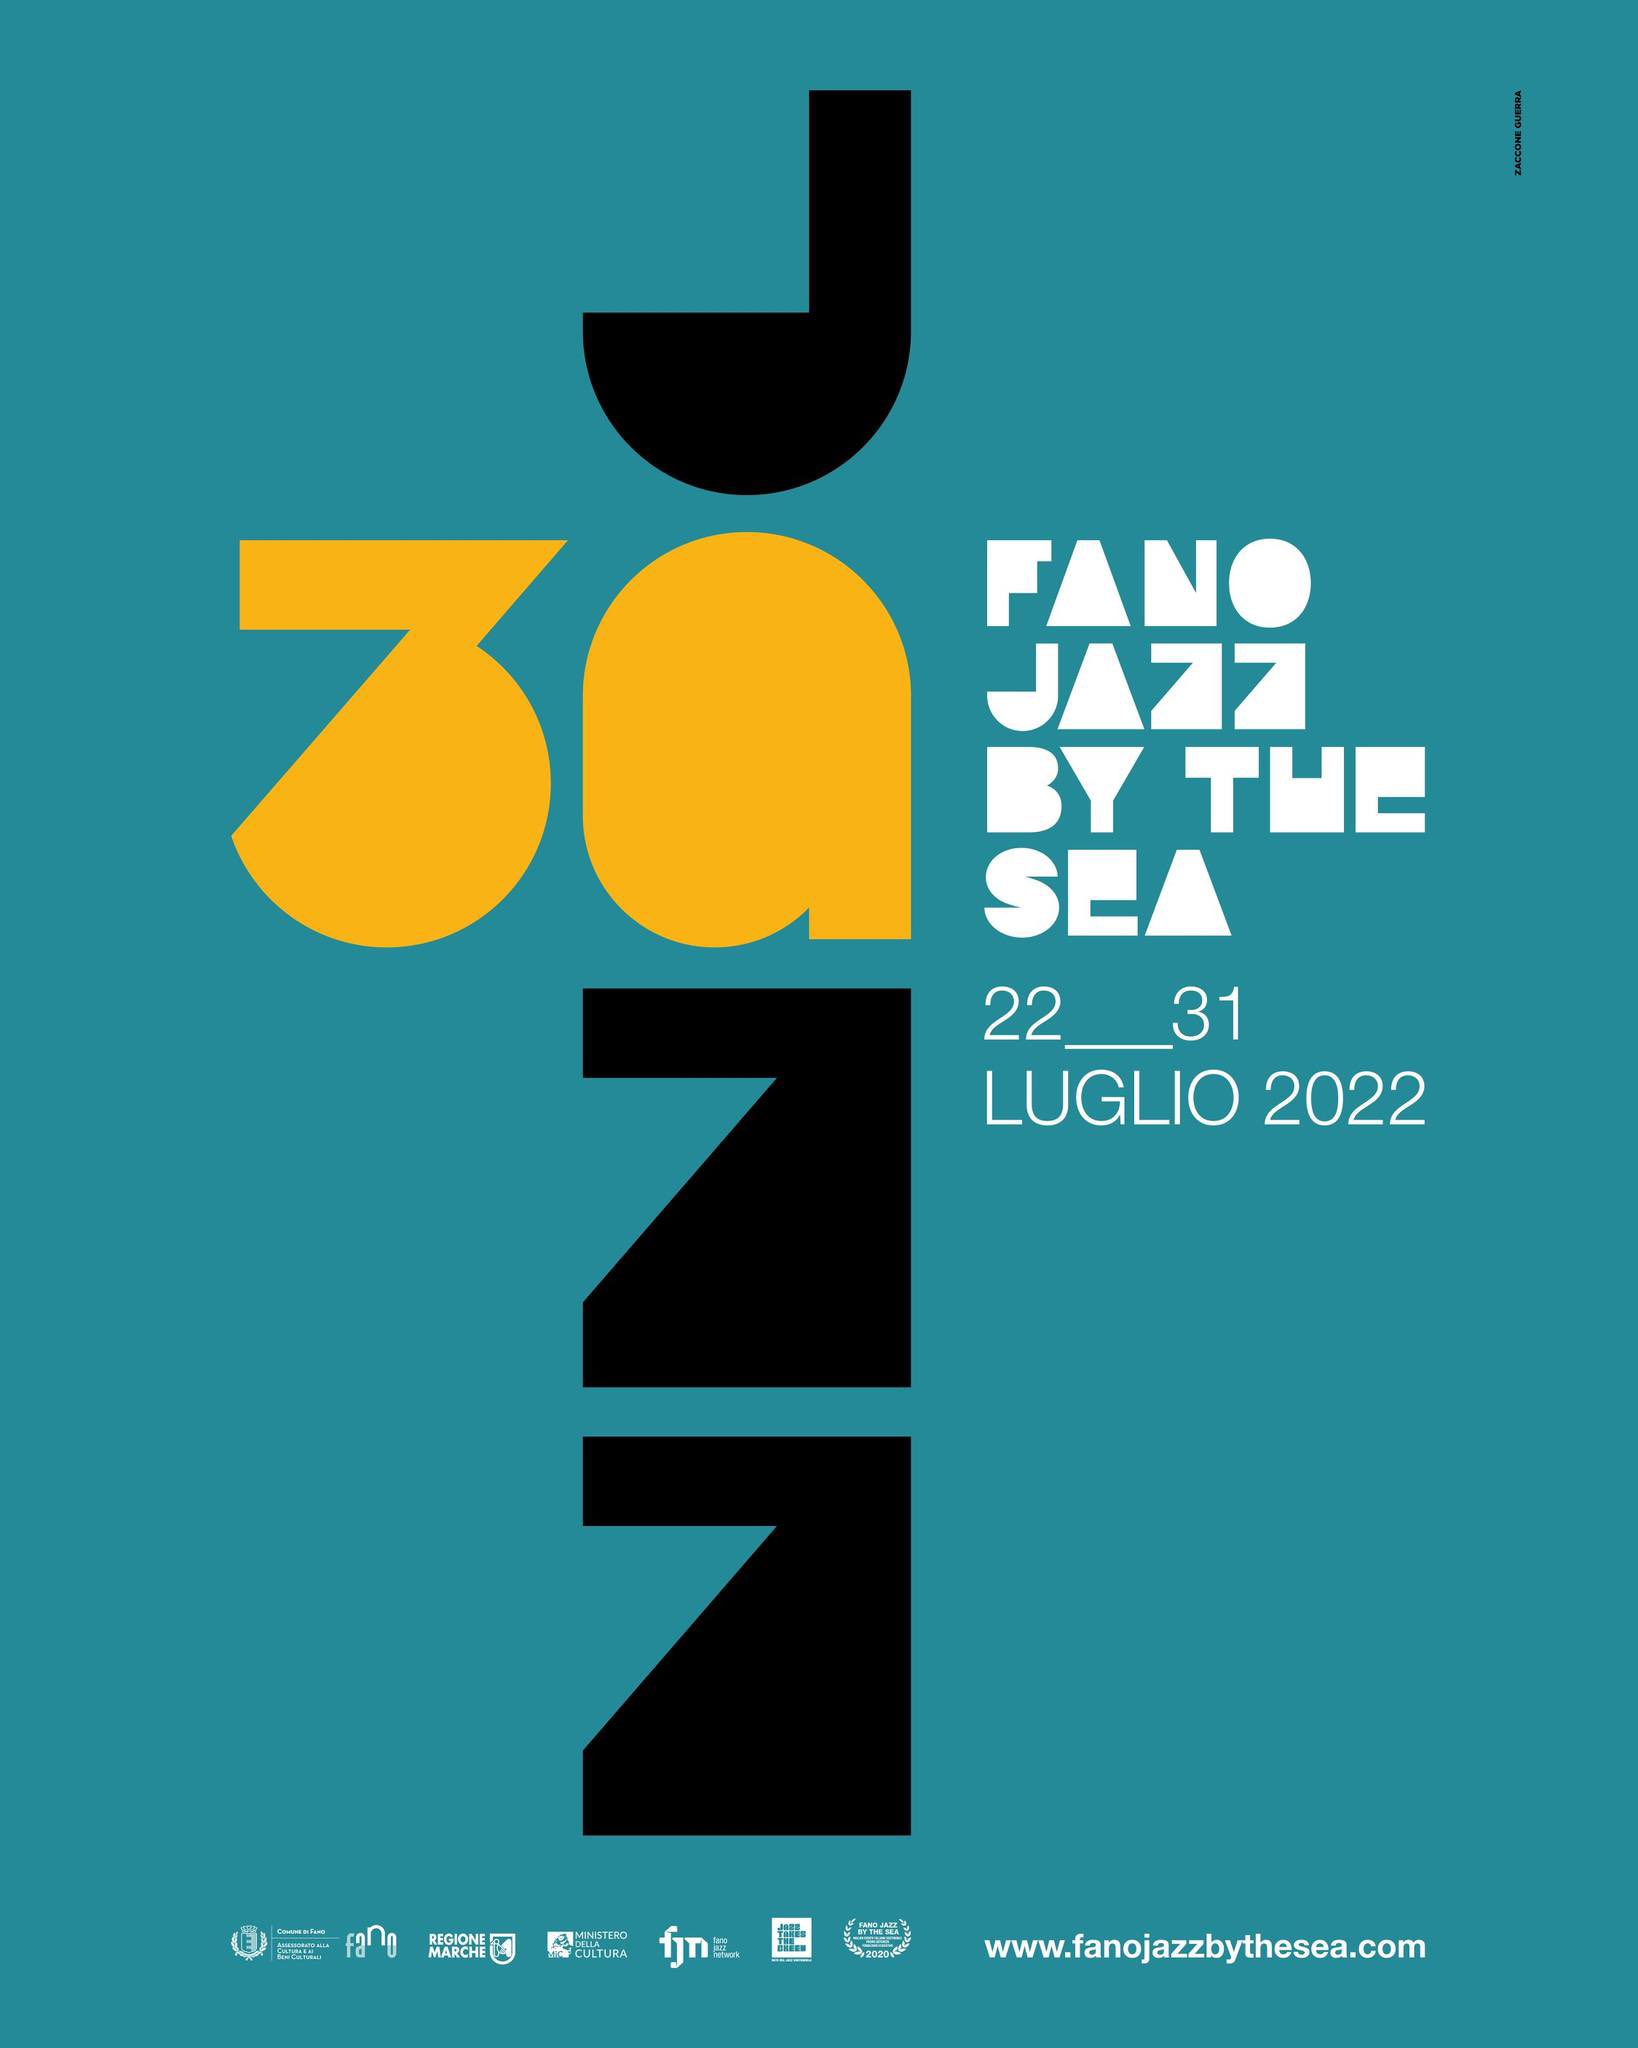 Fano Jazz Network (@FanoJazzNetwork) / Twitter